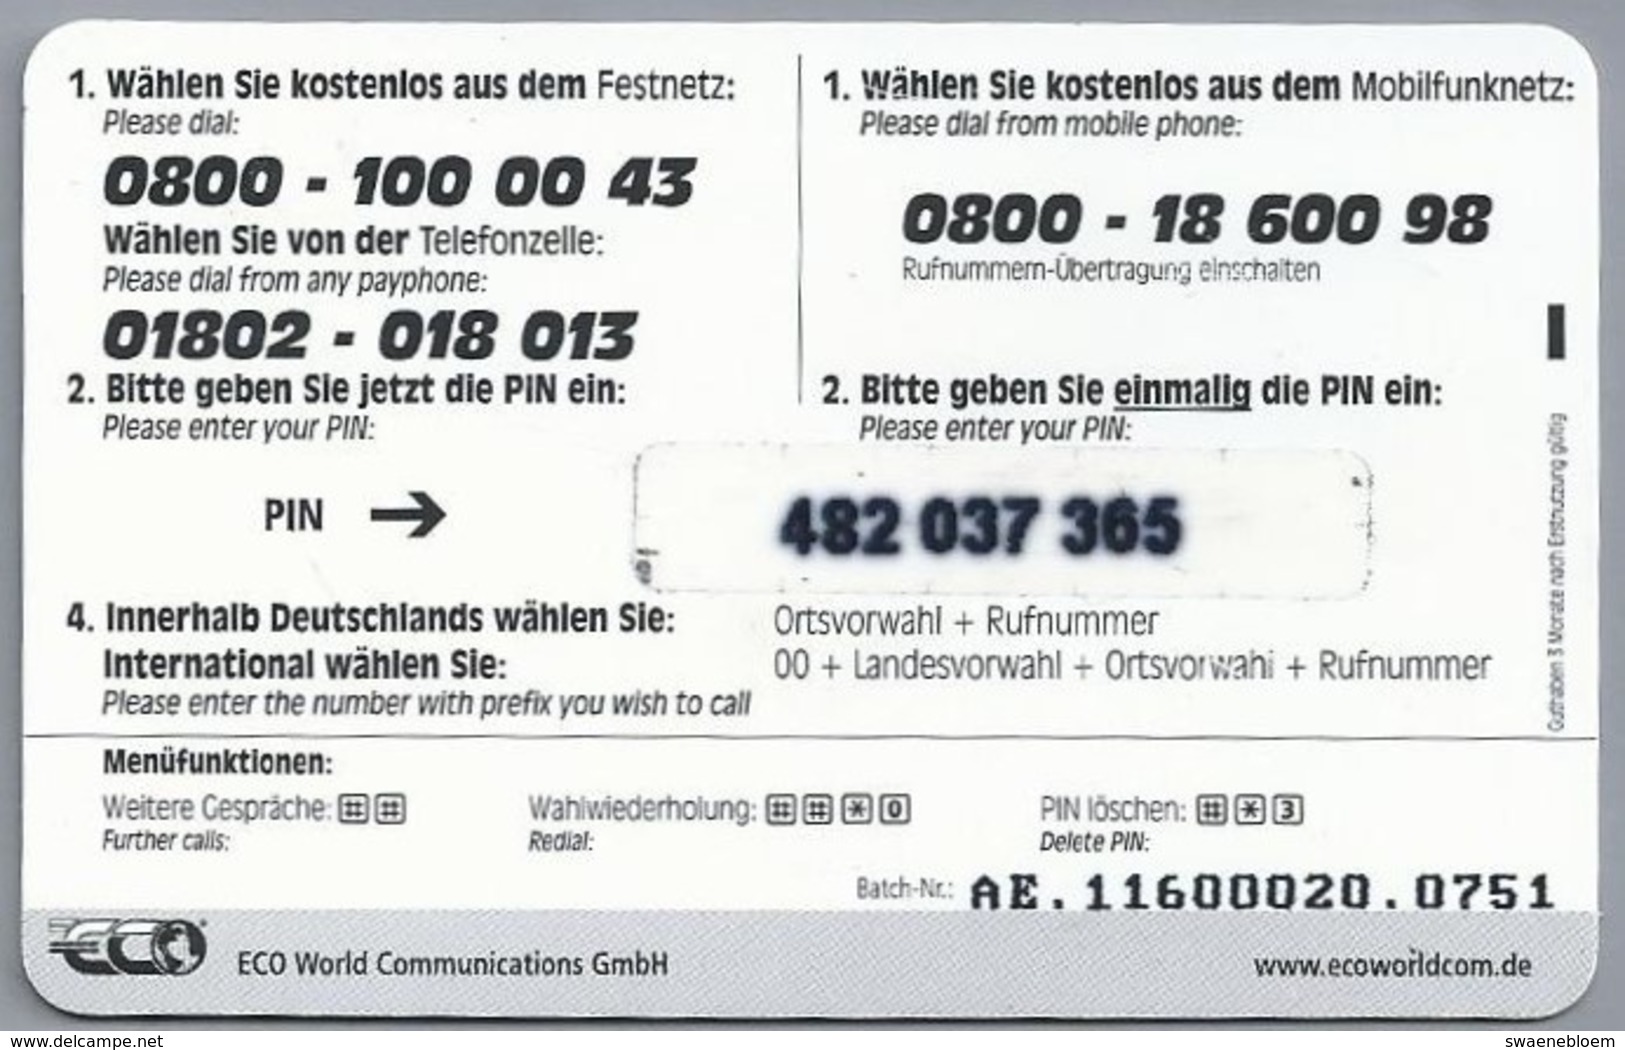 DE.- INTERNATIONAL PHONECARD - KING CALLING CARD 777. 5 Euro -  2 Scans. - GSM, Cartes Prepayées & Recharges